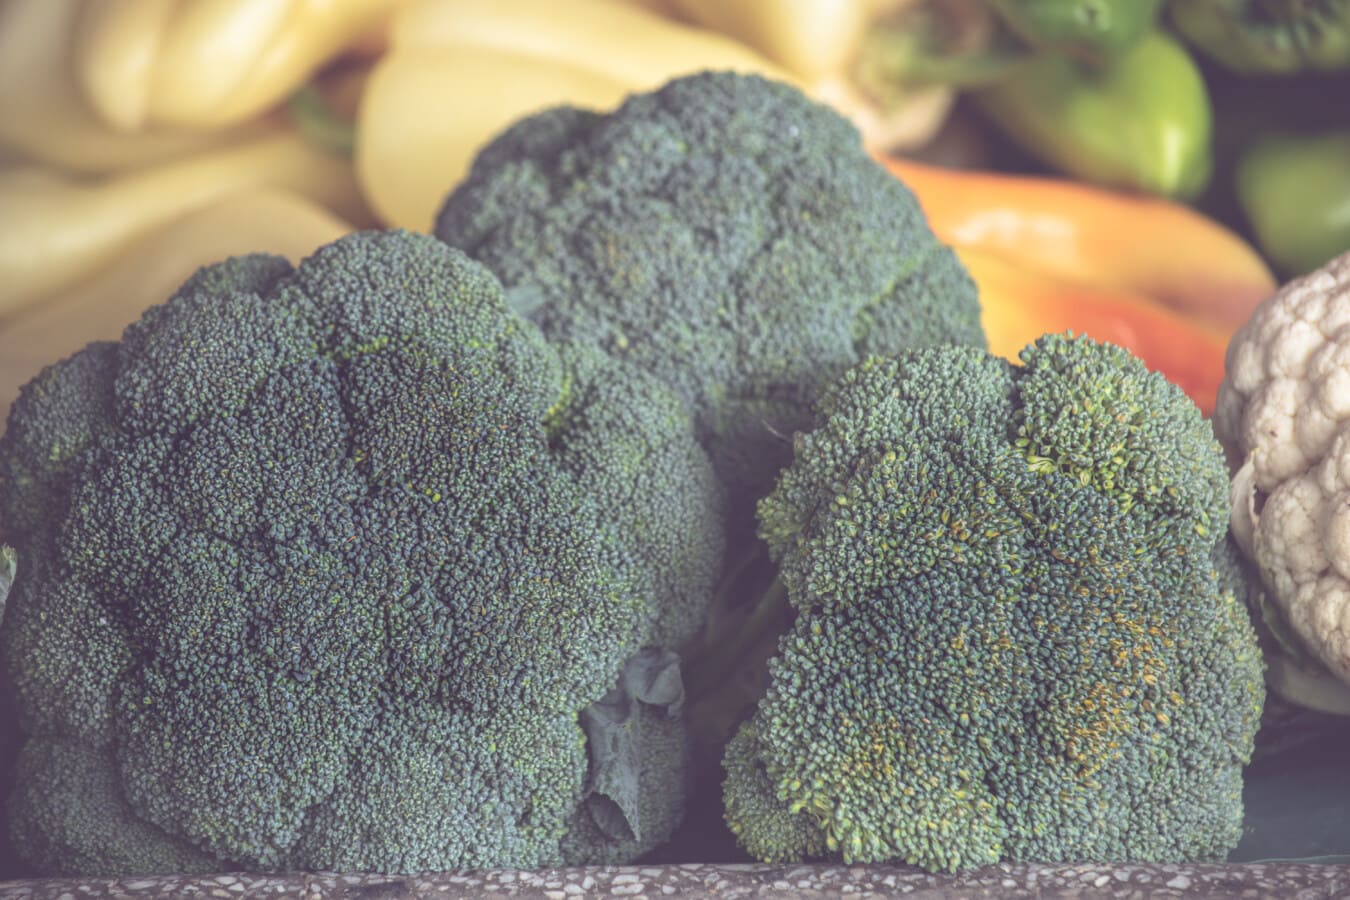 antioxidant, broccoli, organic, marketplace, vegetable, food, healthy, produce, nature, health